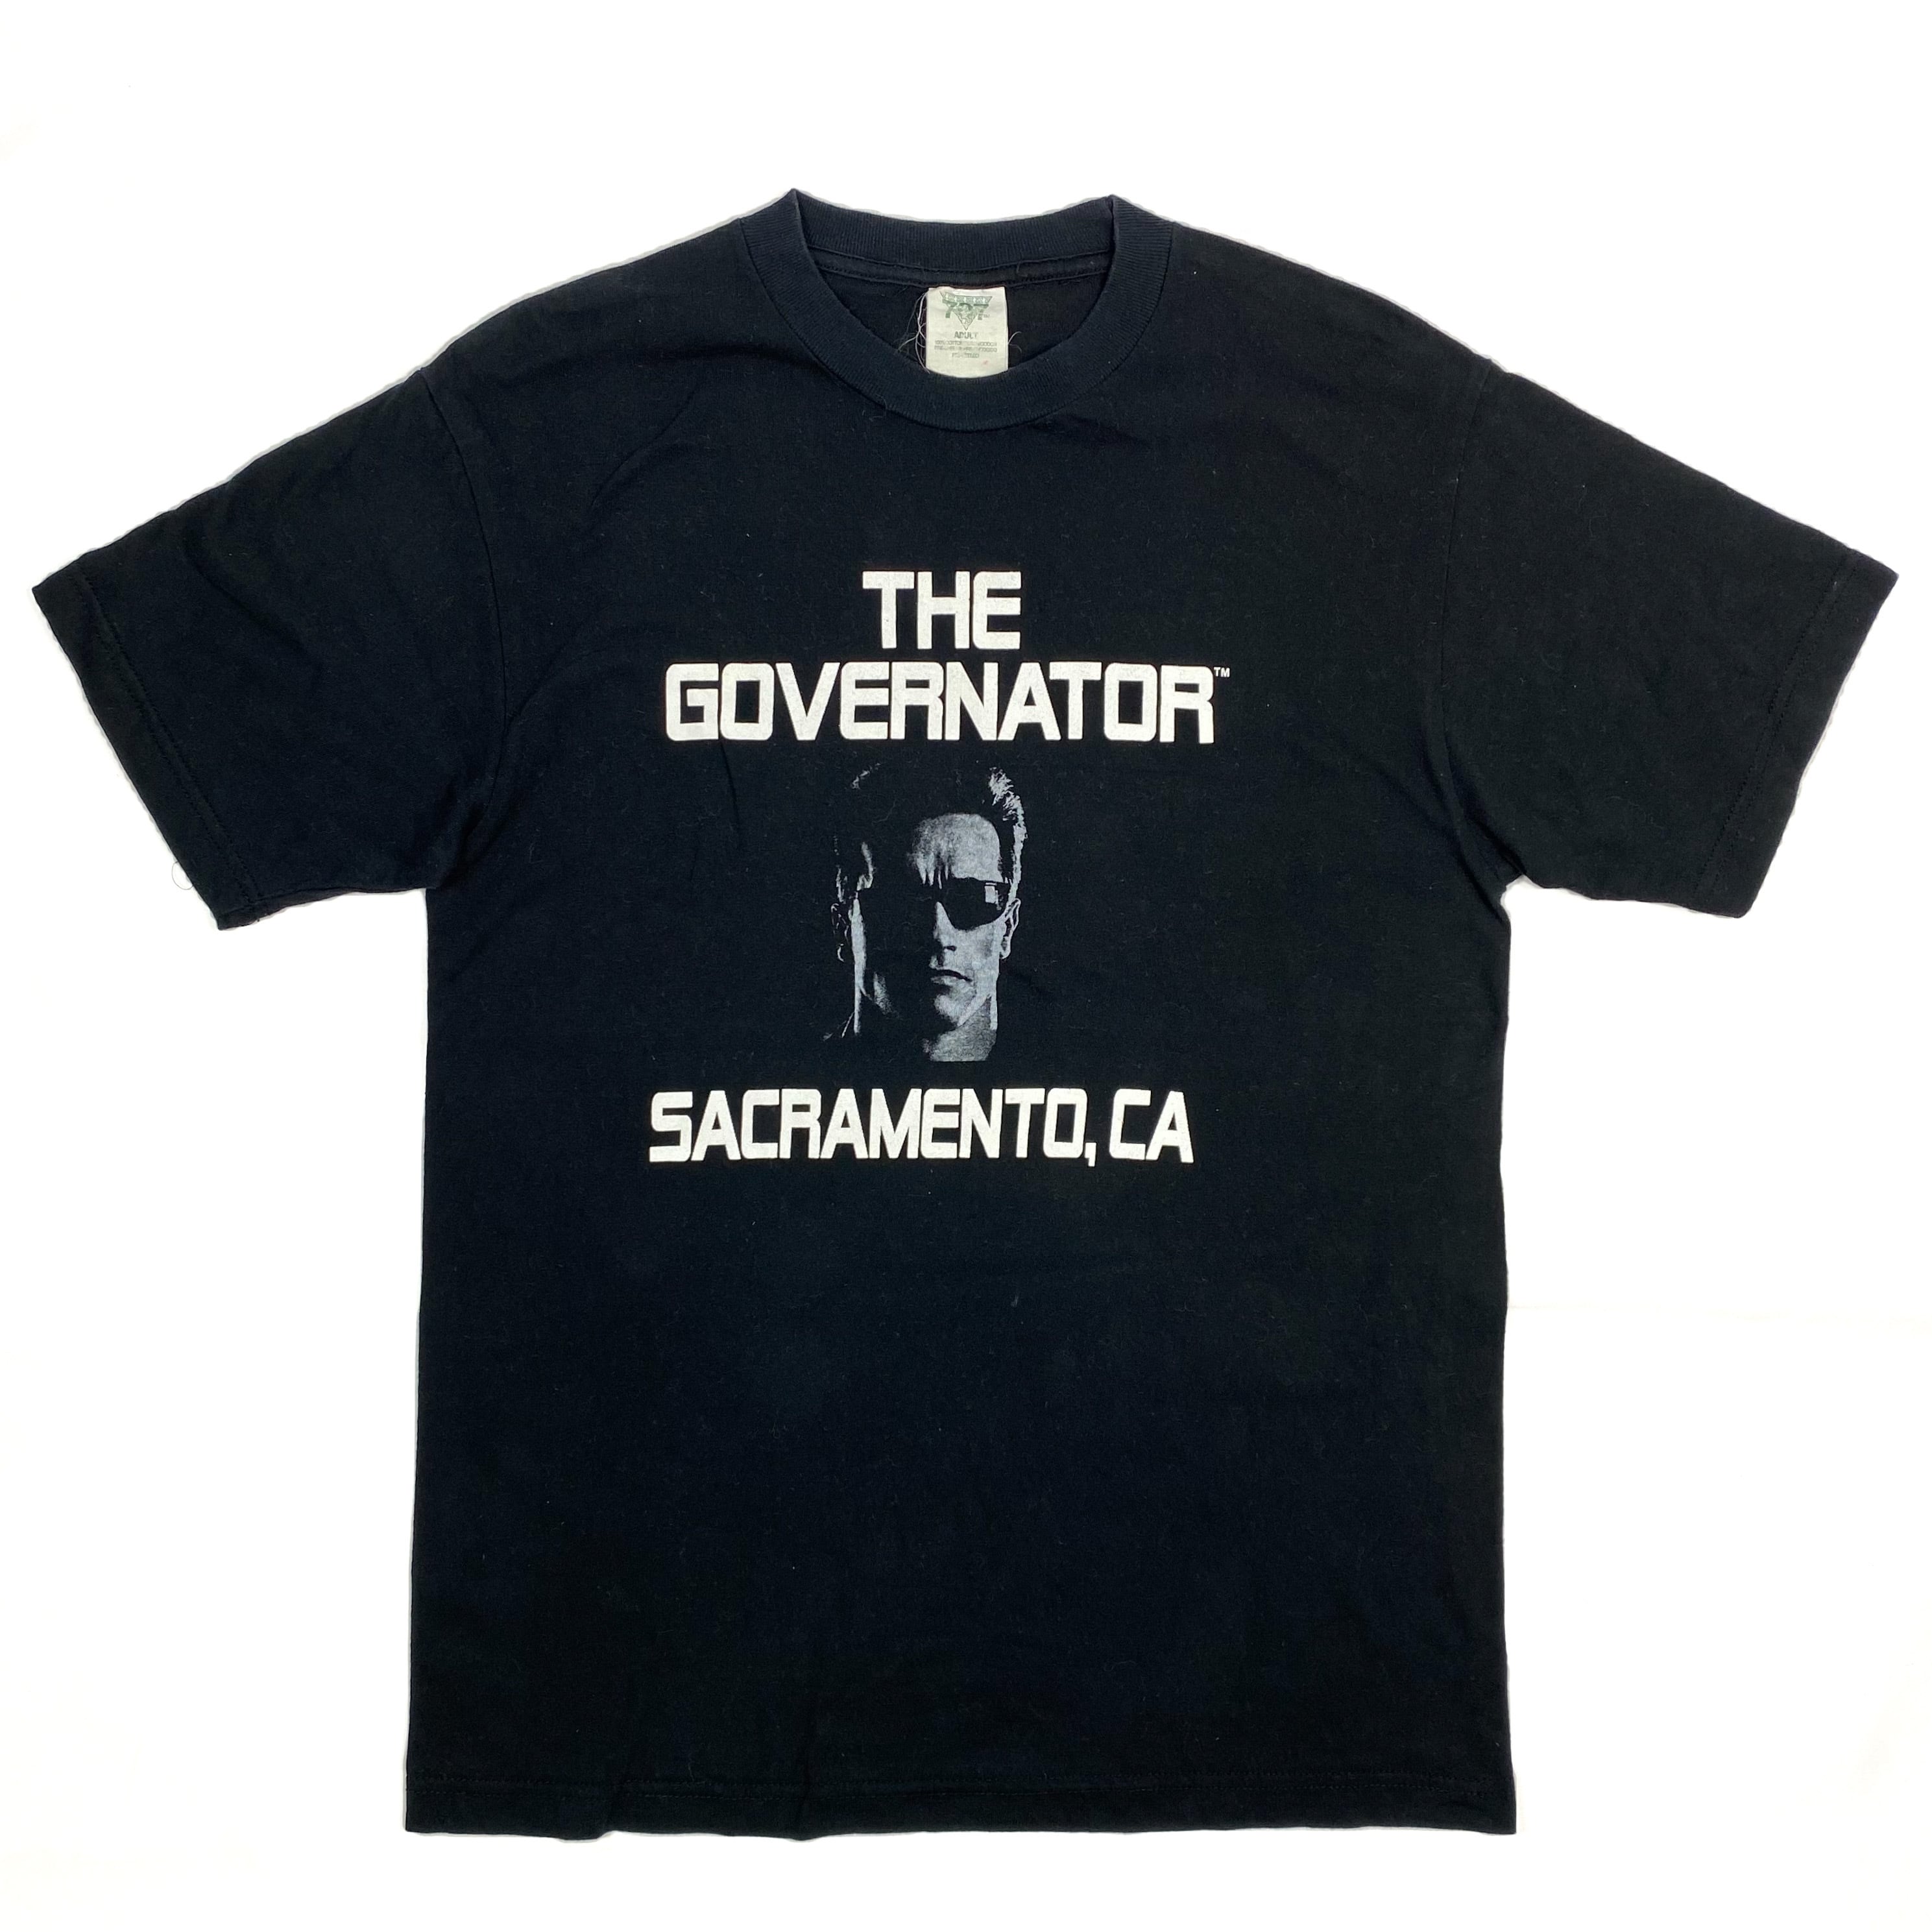 's "THE GOVERNATOR" Printed T Shirt / アーノルド・シュワルツェ